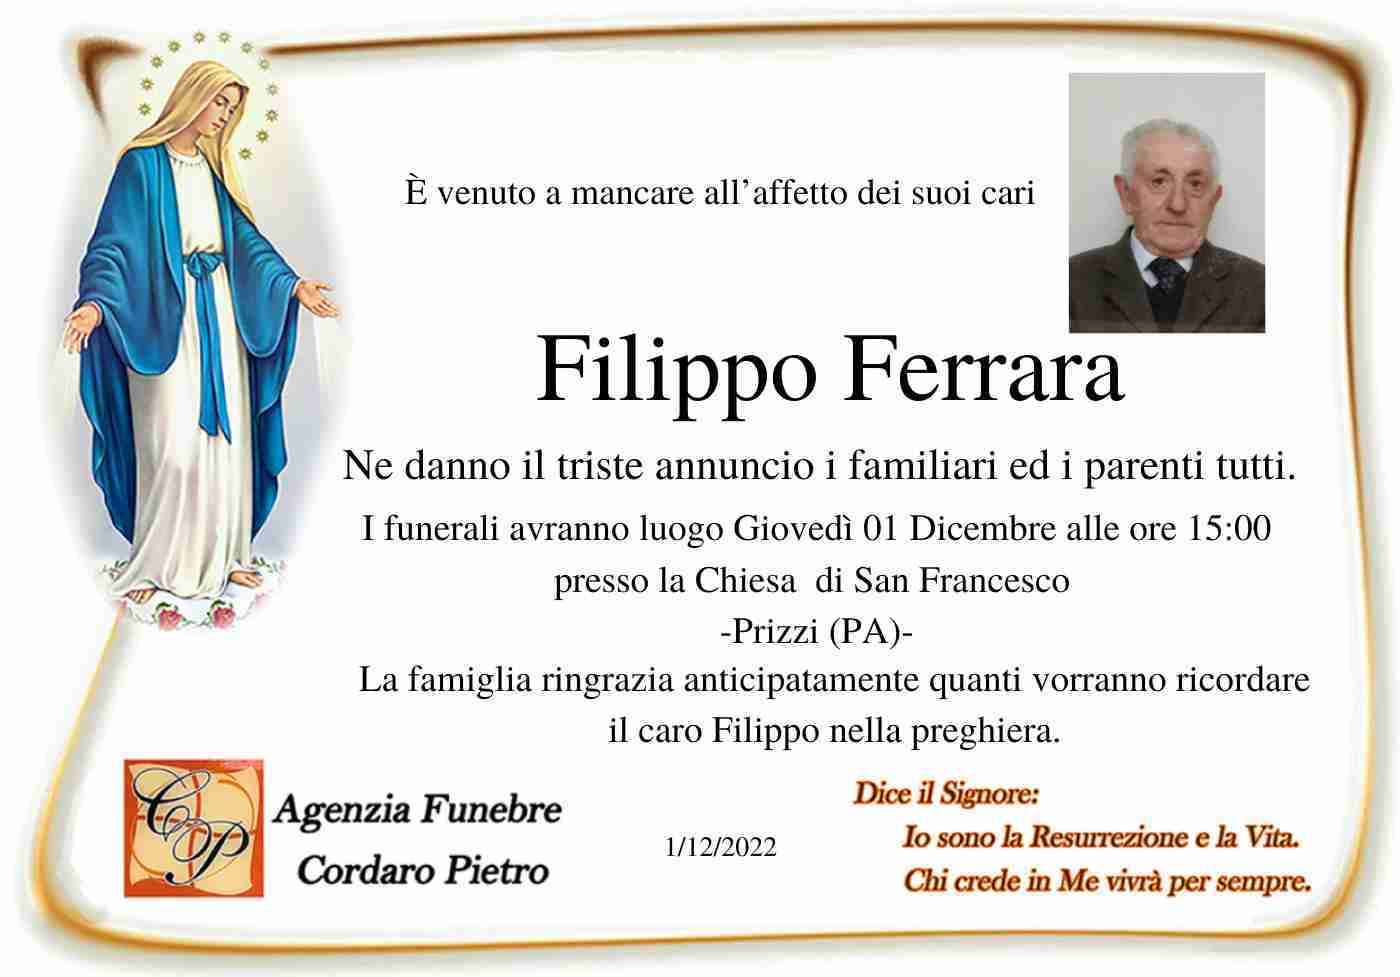 Filippo Ferrara